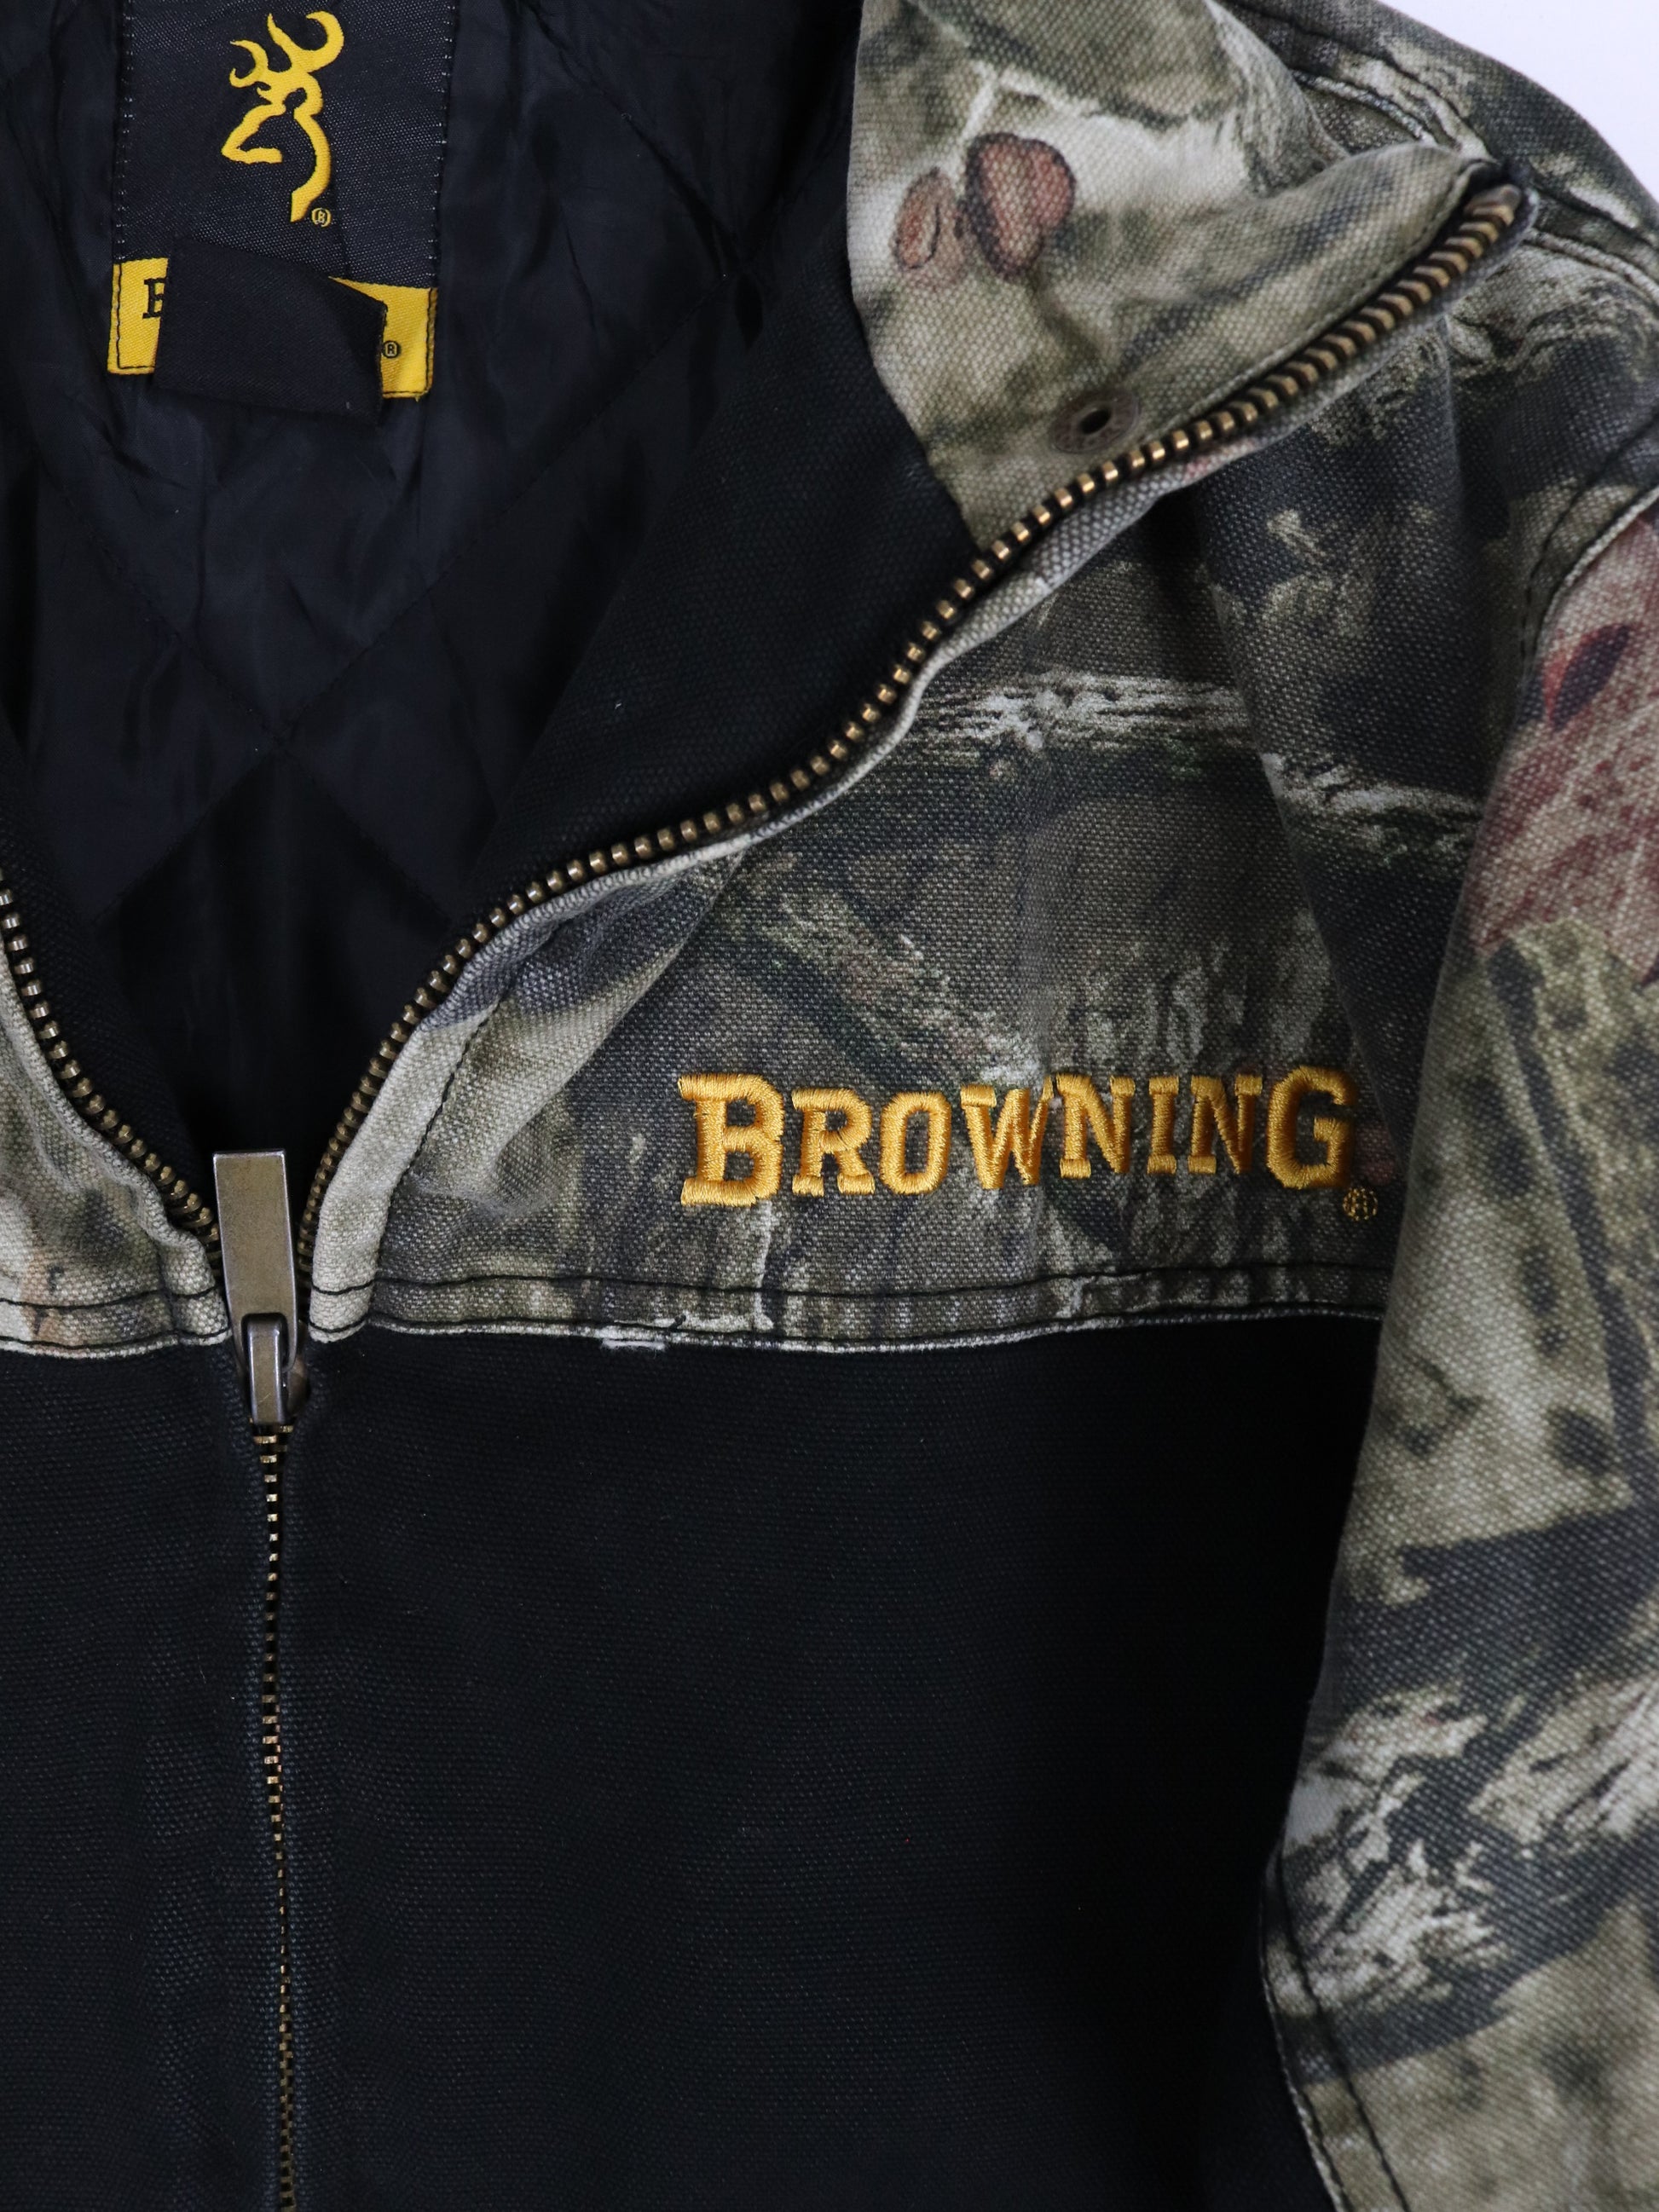 Browning Vintage Jackets